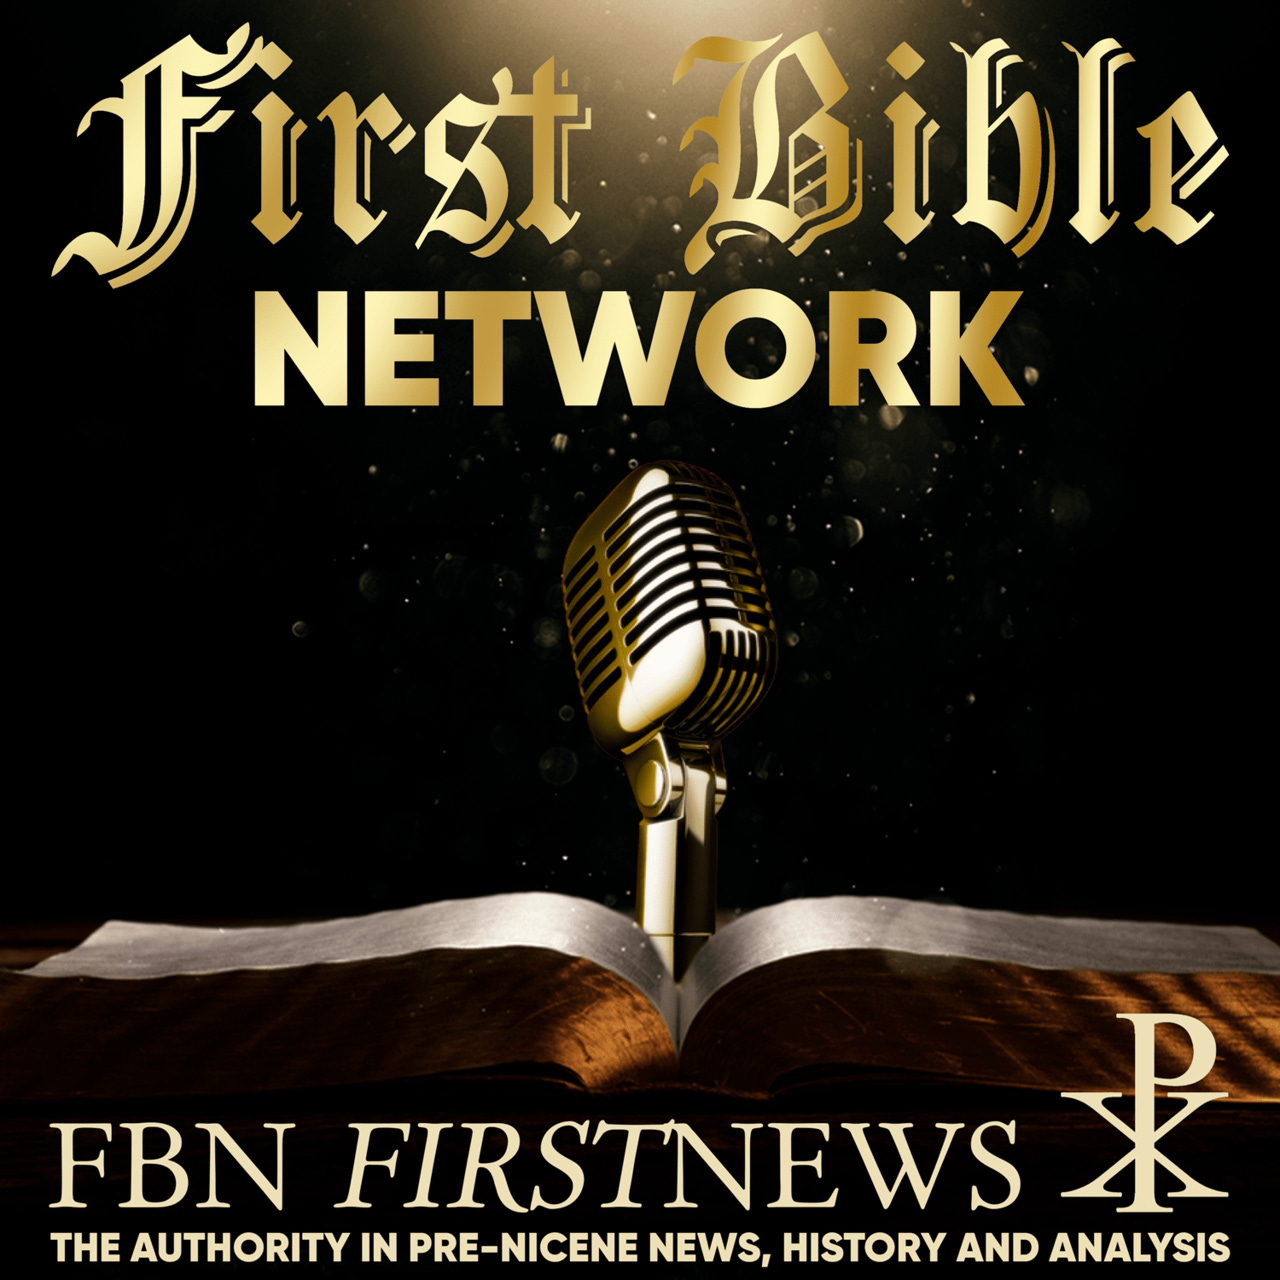 FBN FirstNews